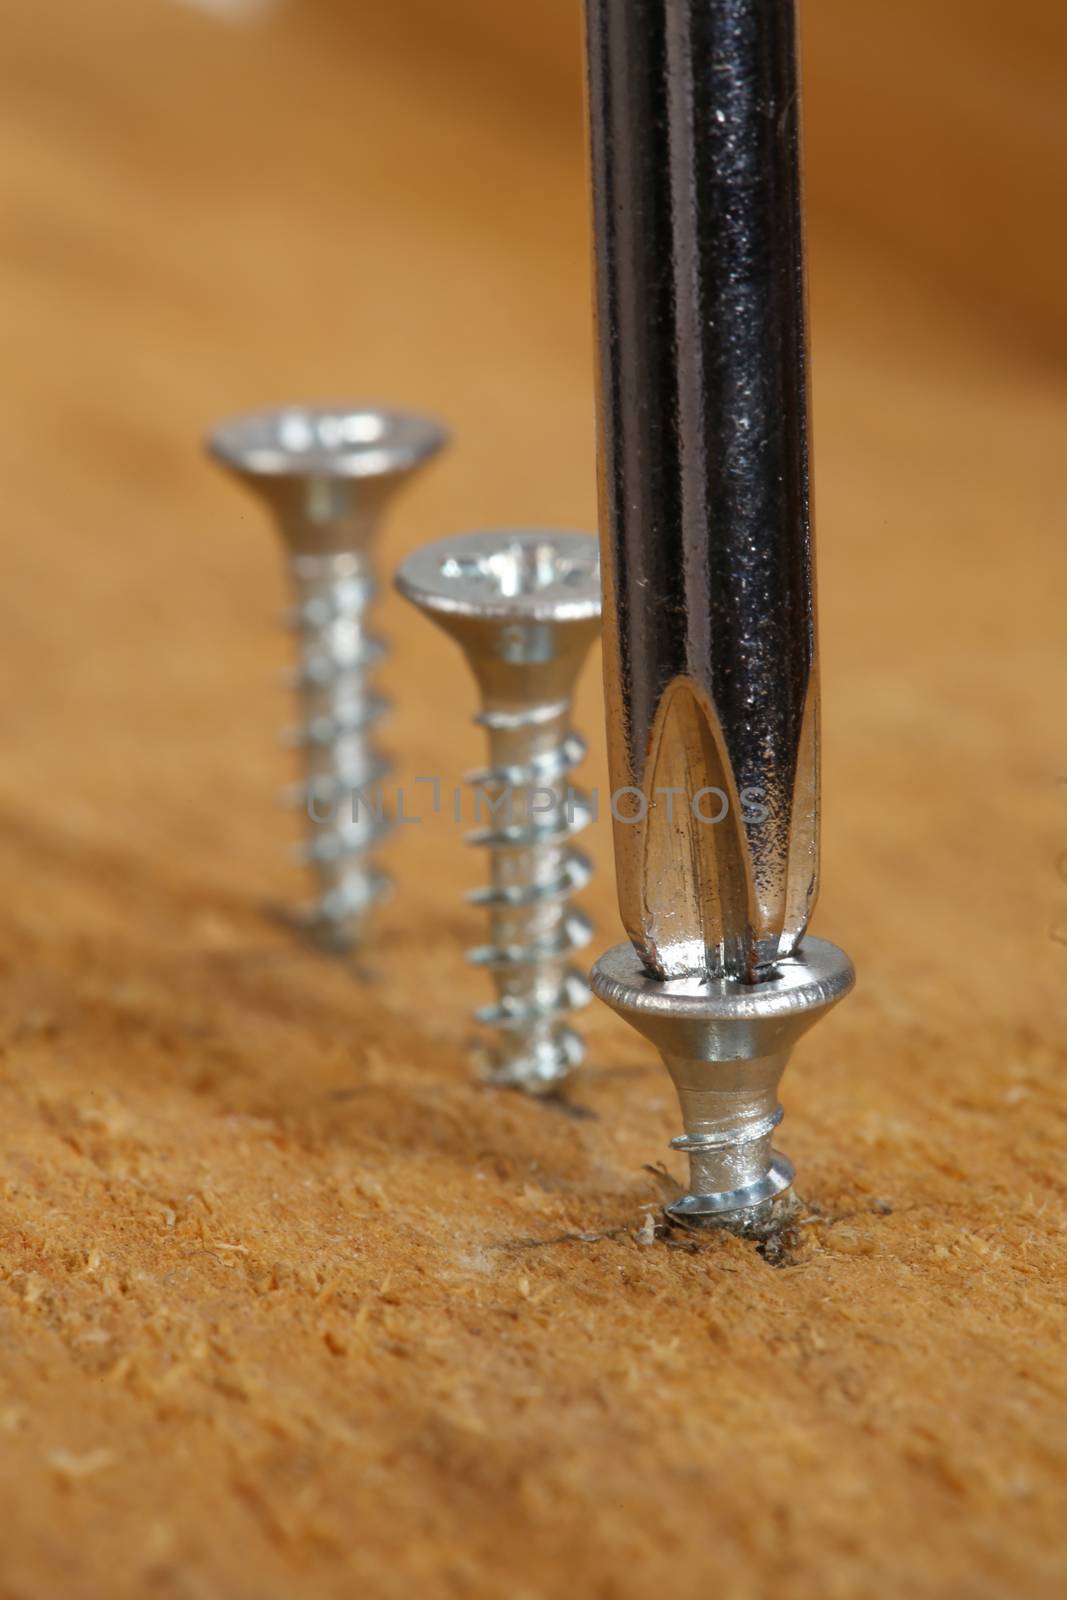 Three screws  and screwdriver close up